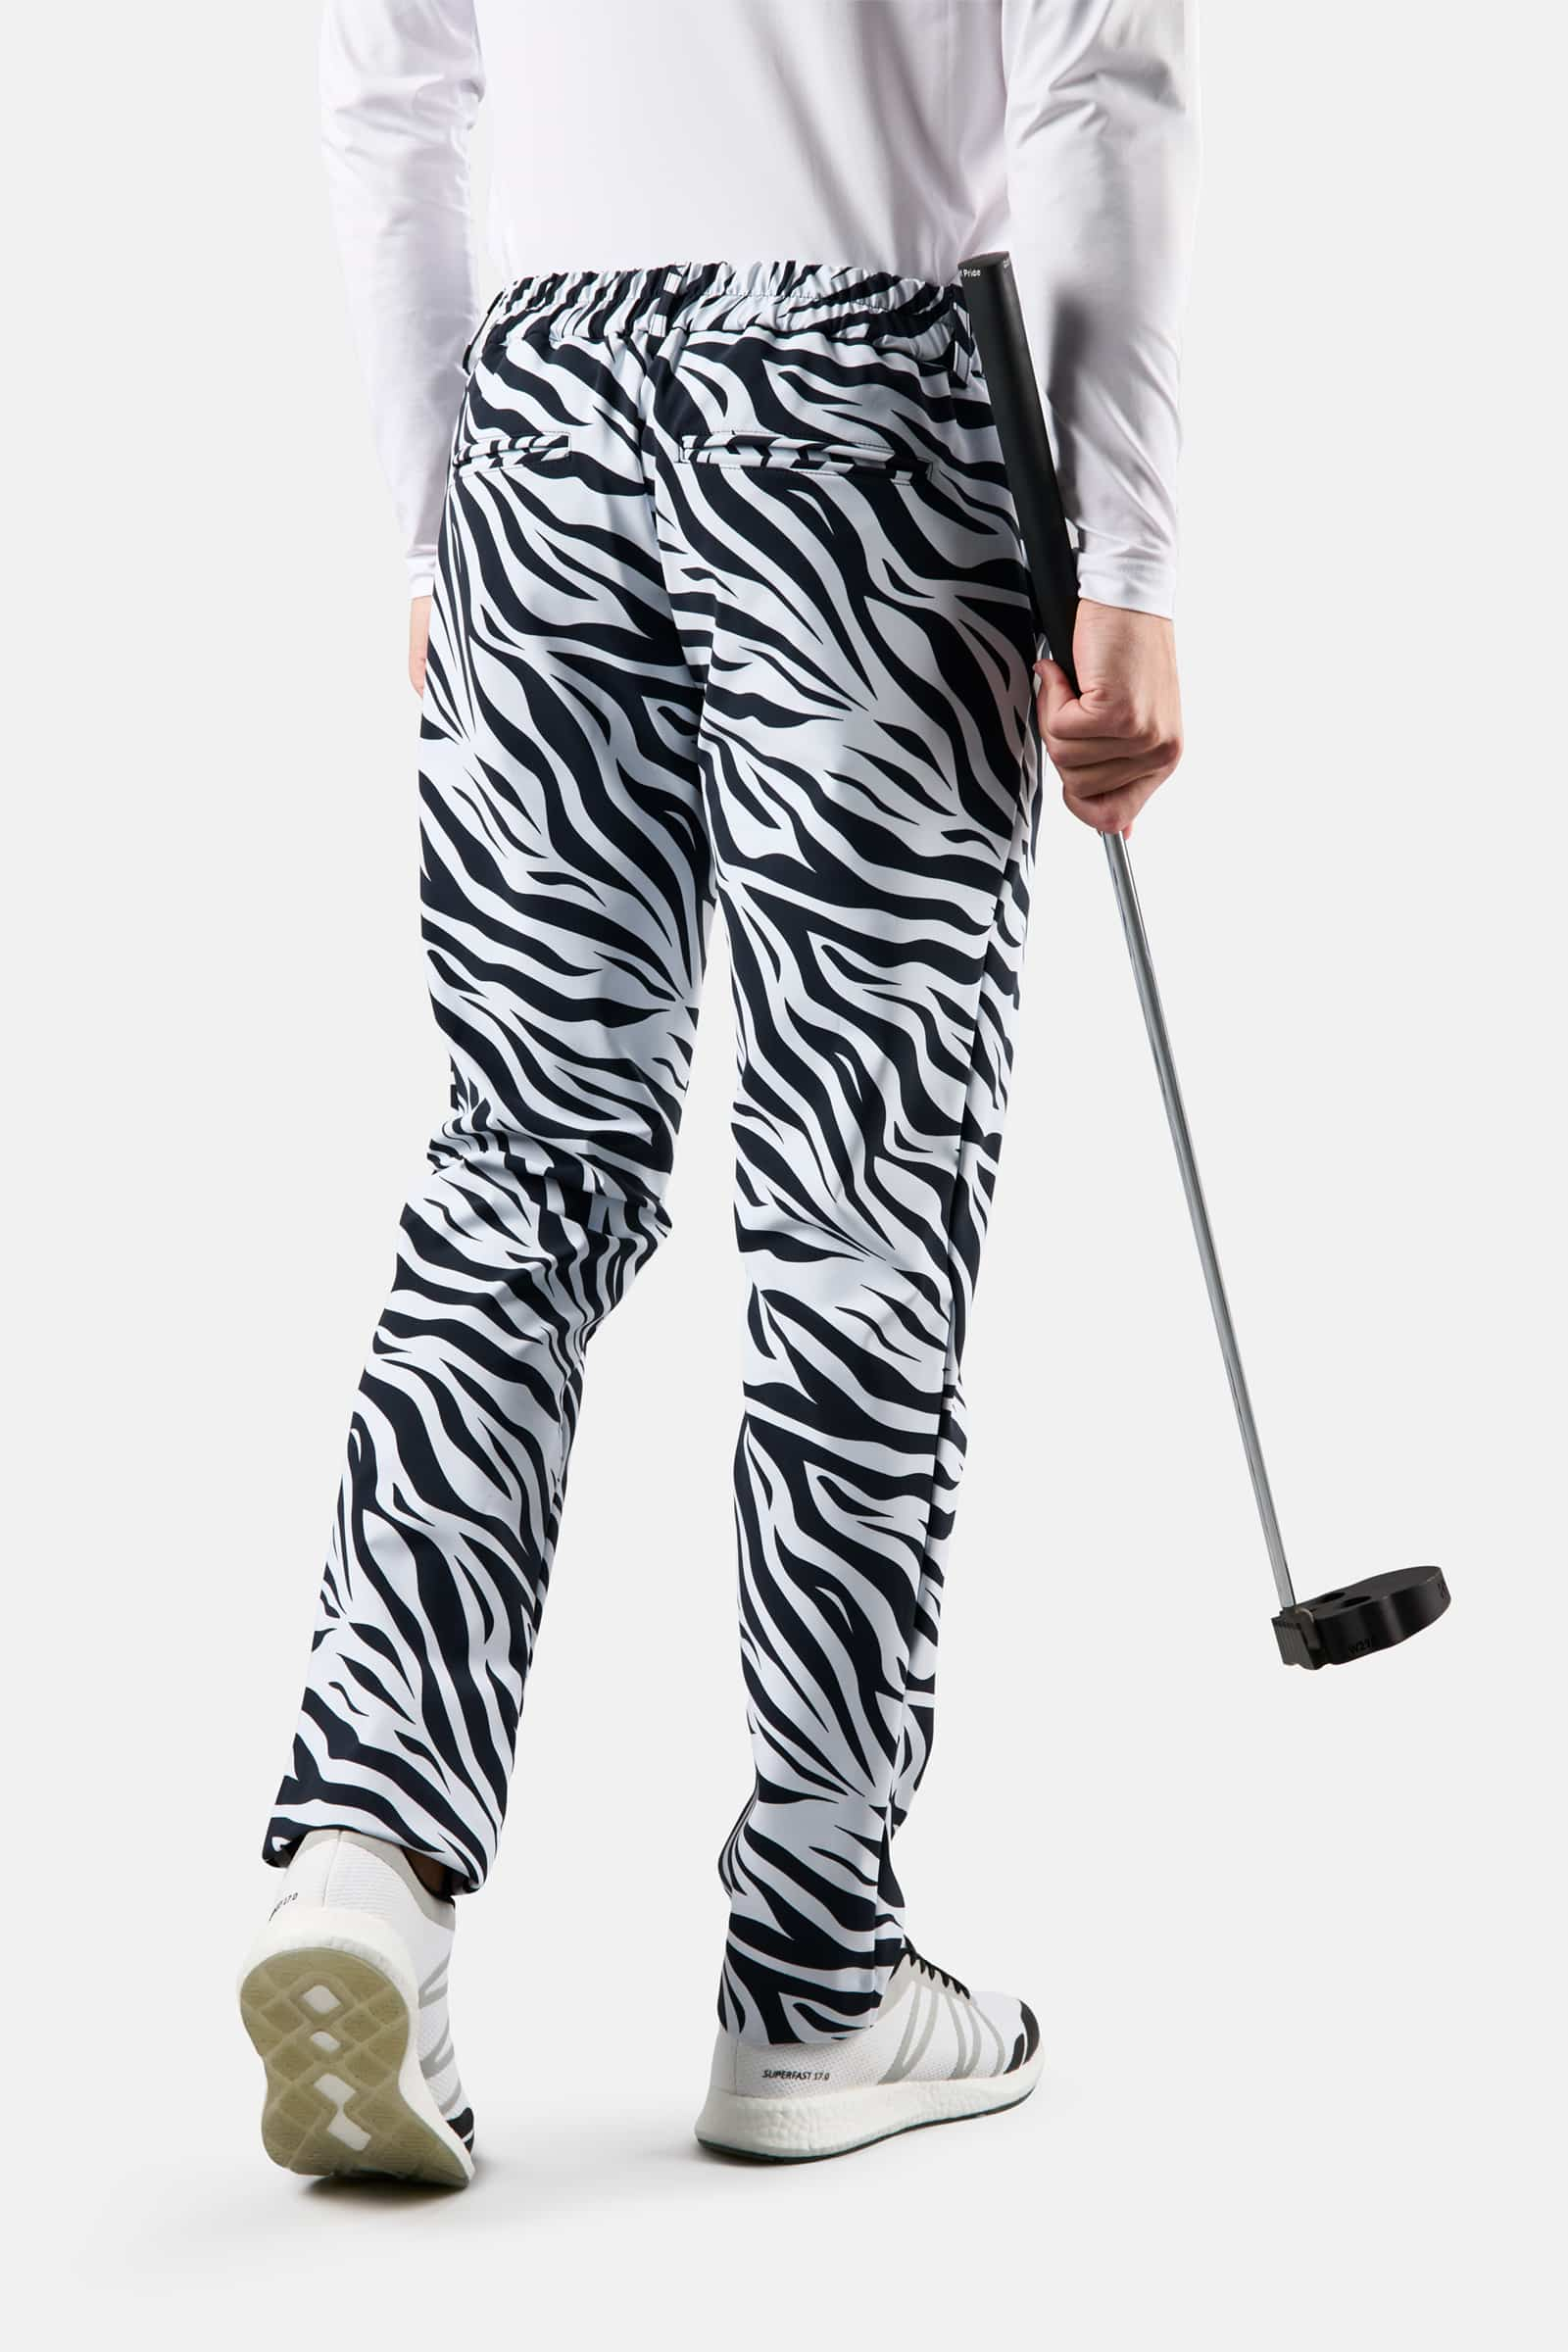 Pantaloni invernali da golf - ZEBRA - Abbigliamento sportivo | Hydrogen